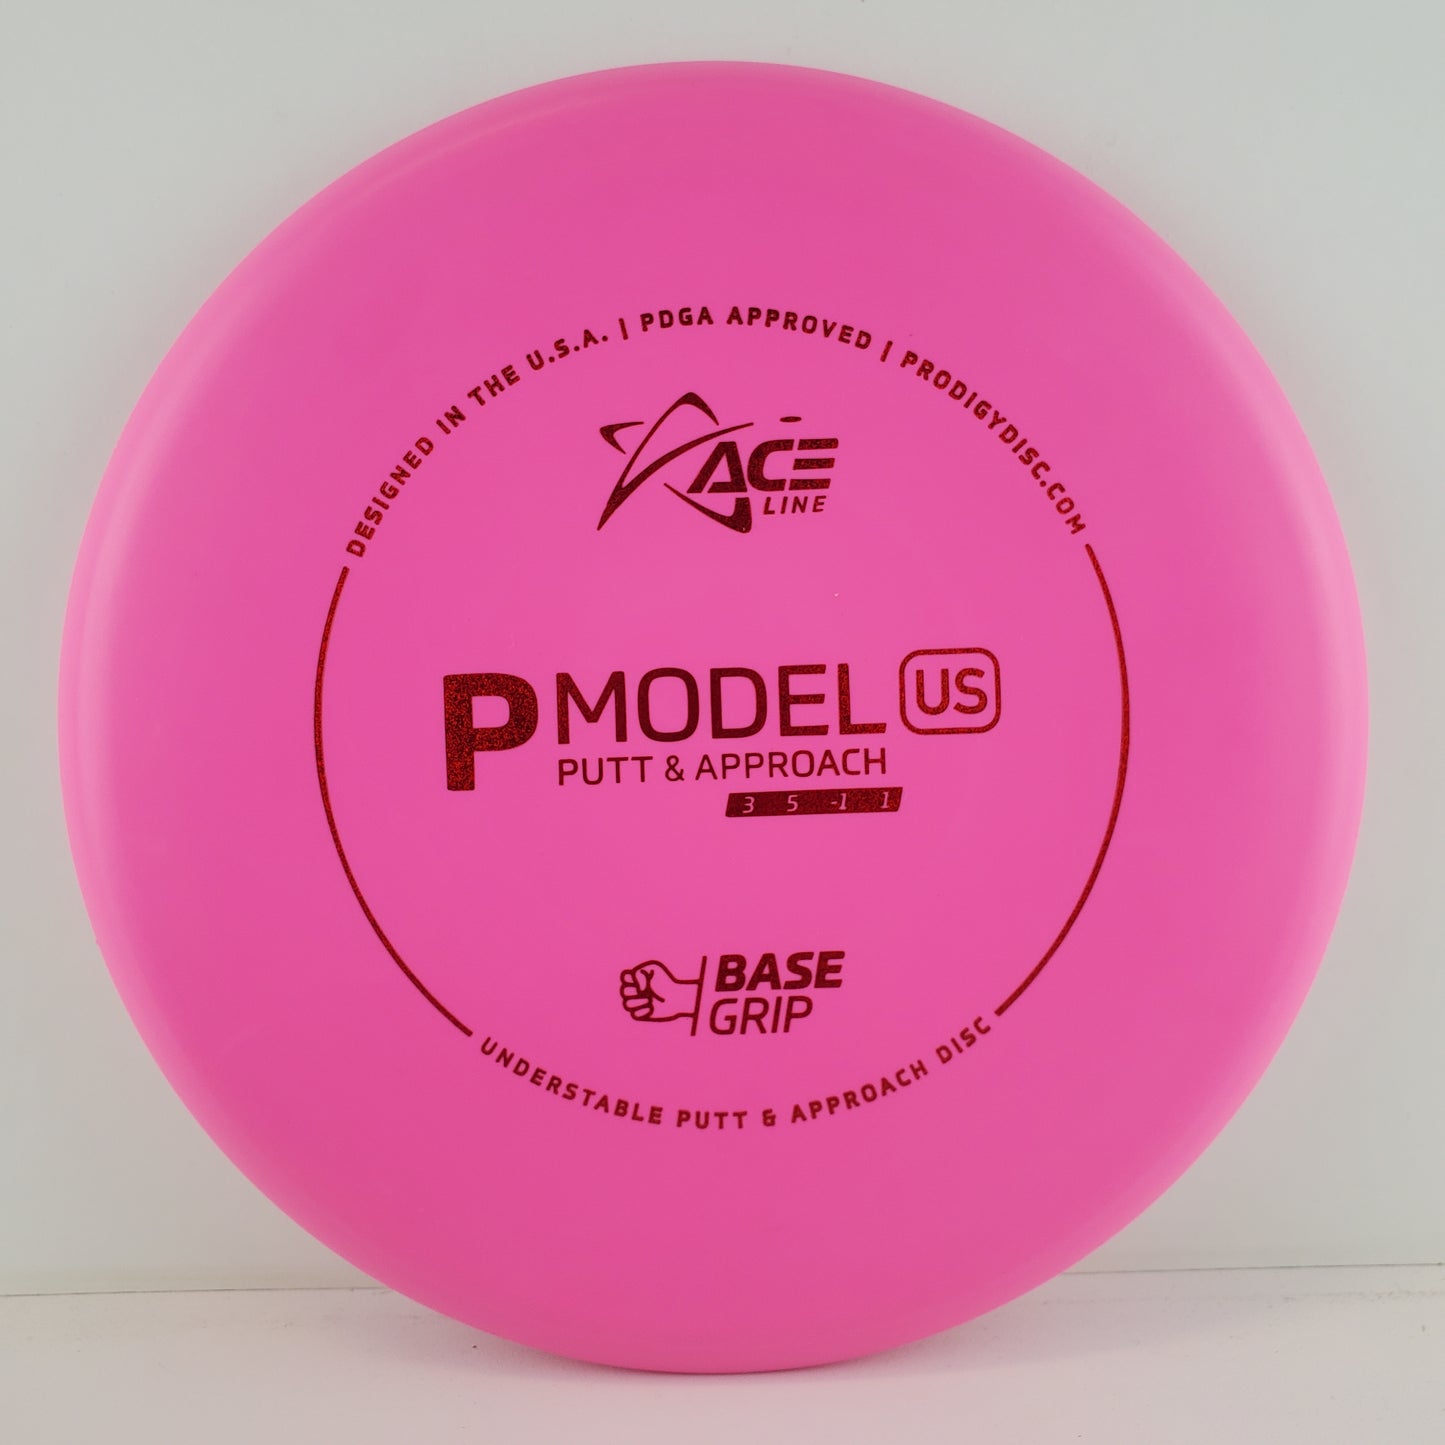 P Model US